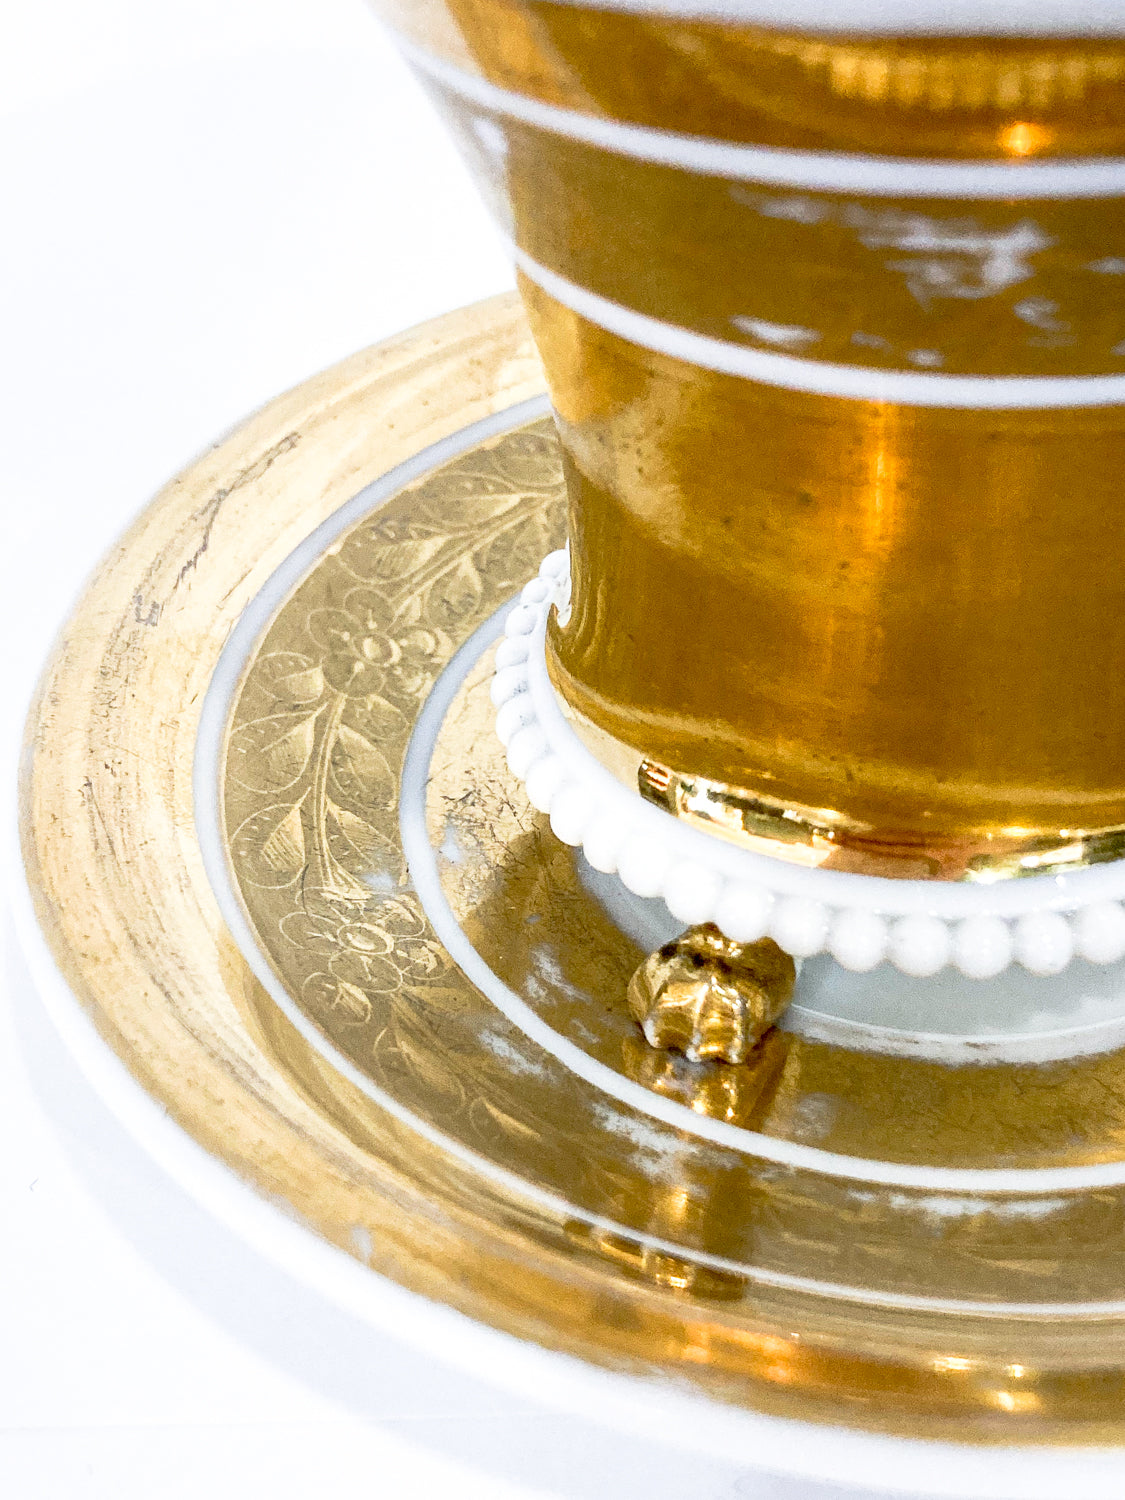 Antique Regal Golden Claw Foot Gilded Porcelain Cup & Saucer Set Close Up Saucer Detailing